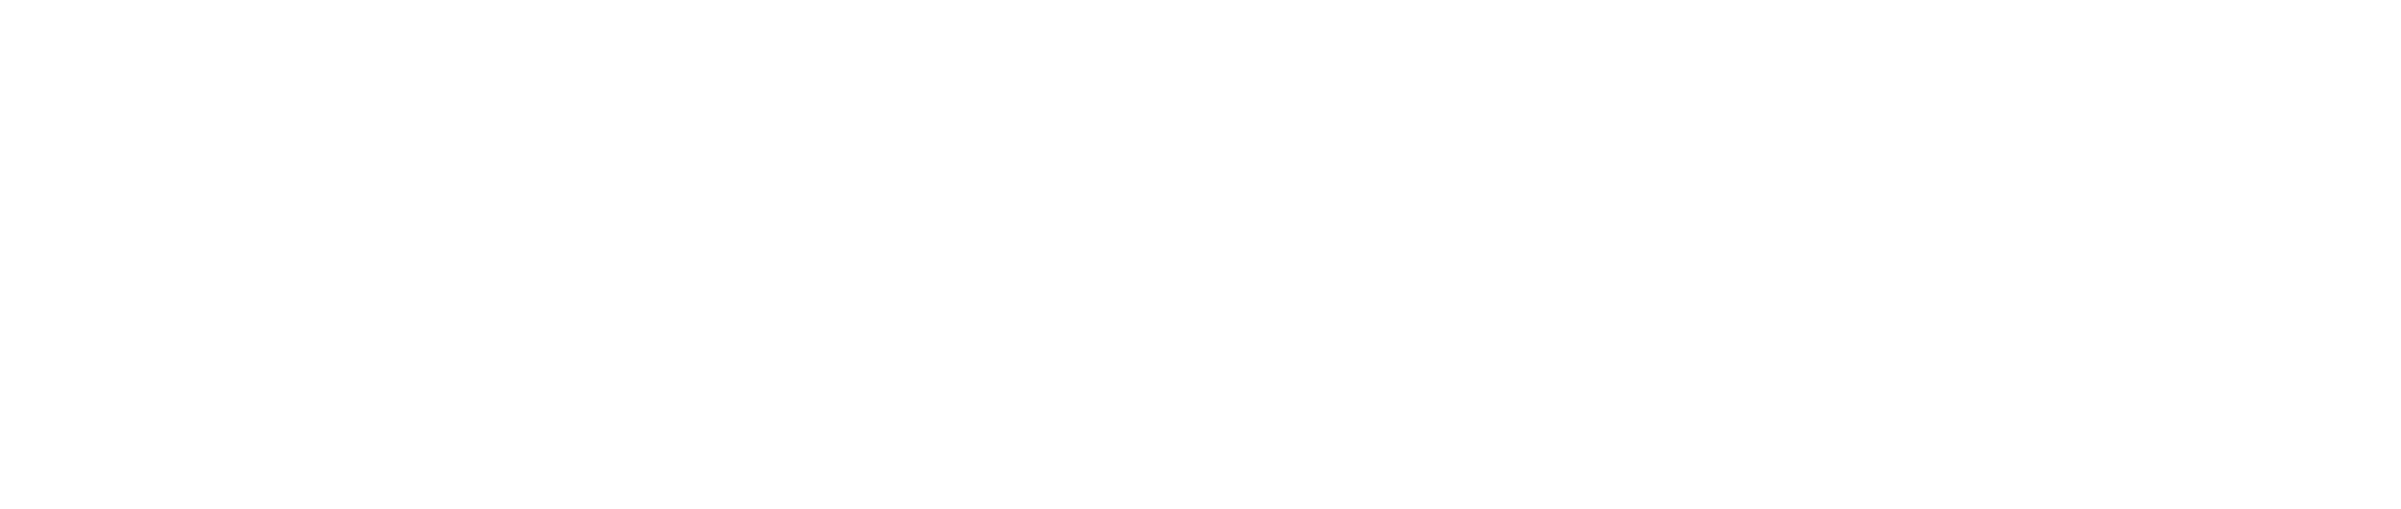 Australian Government Logo - Logo downloads | Australia Council